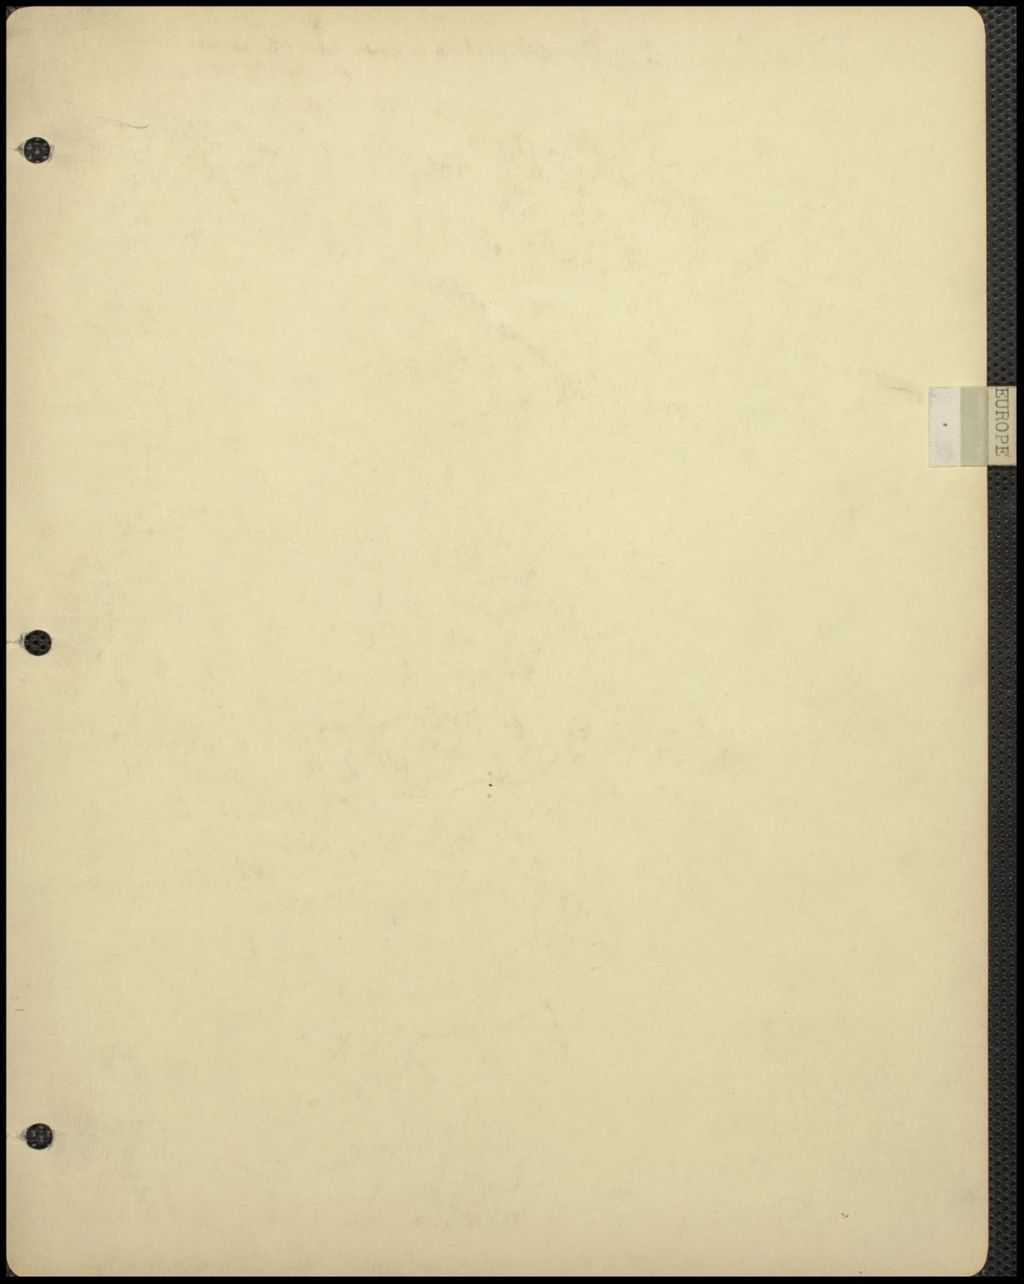 Miniature of Foreign Participation, 1930 (Folder 11-123)